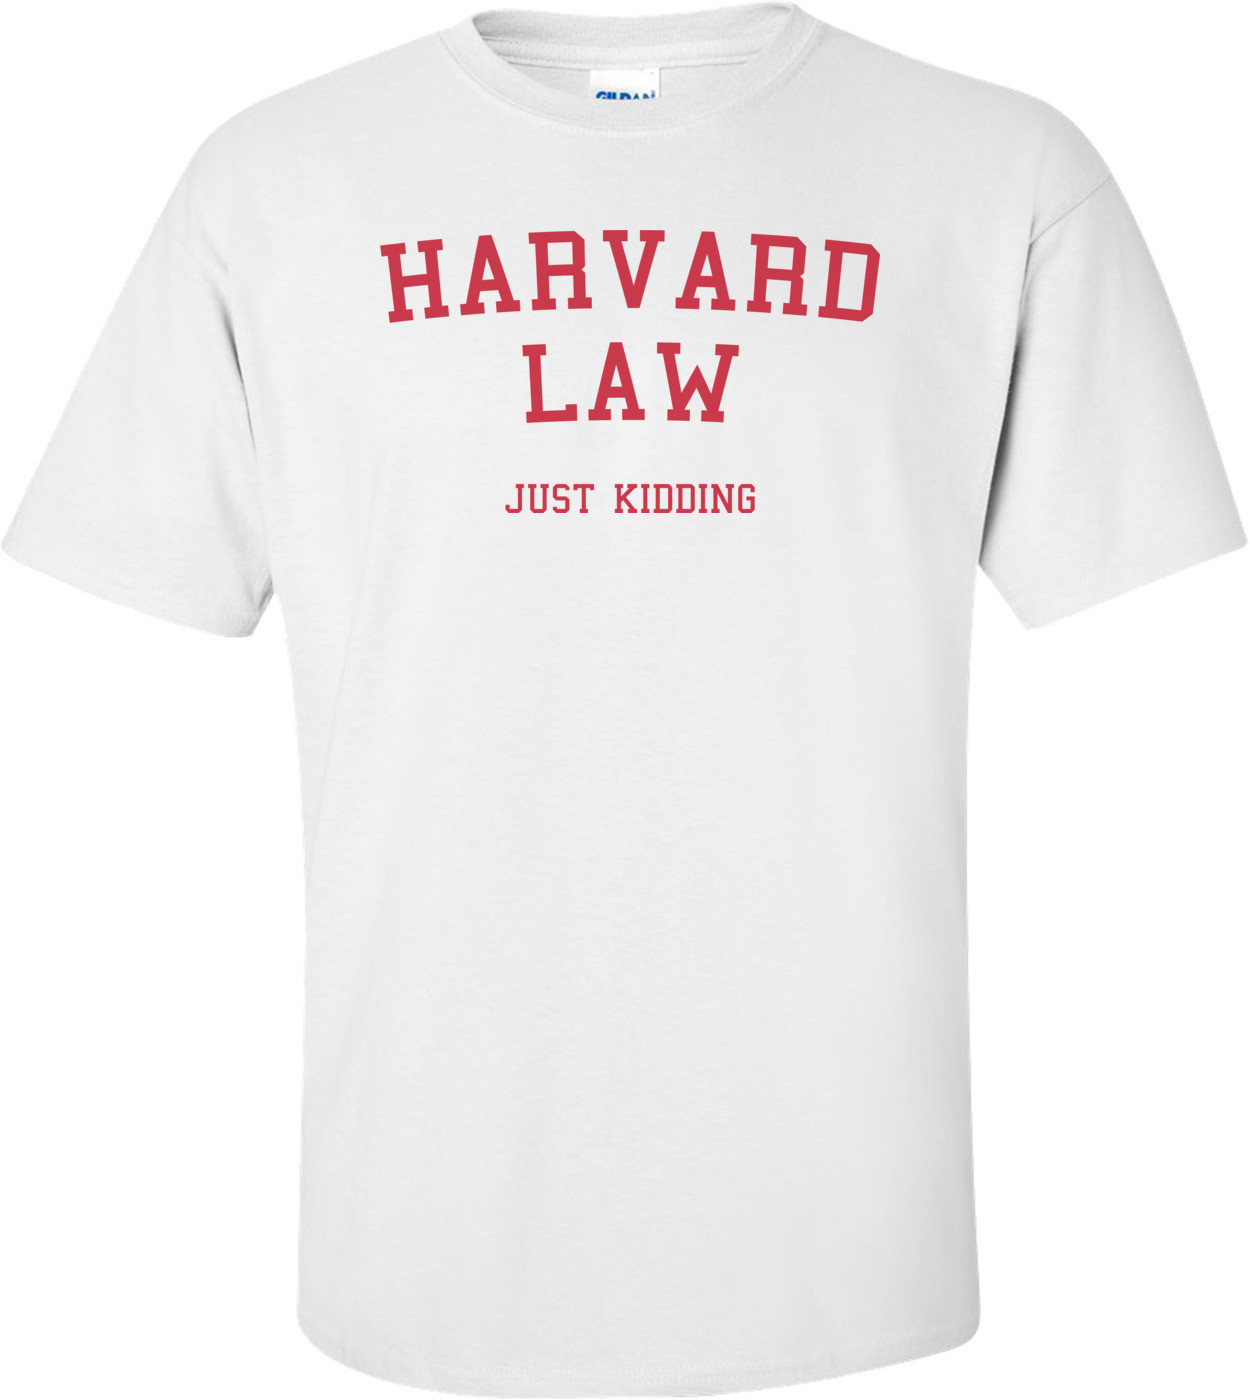 Harvard Law (Just Kidding)